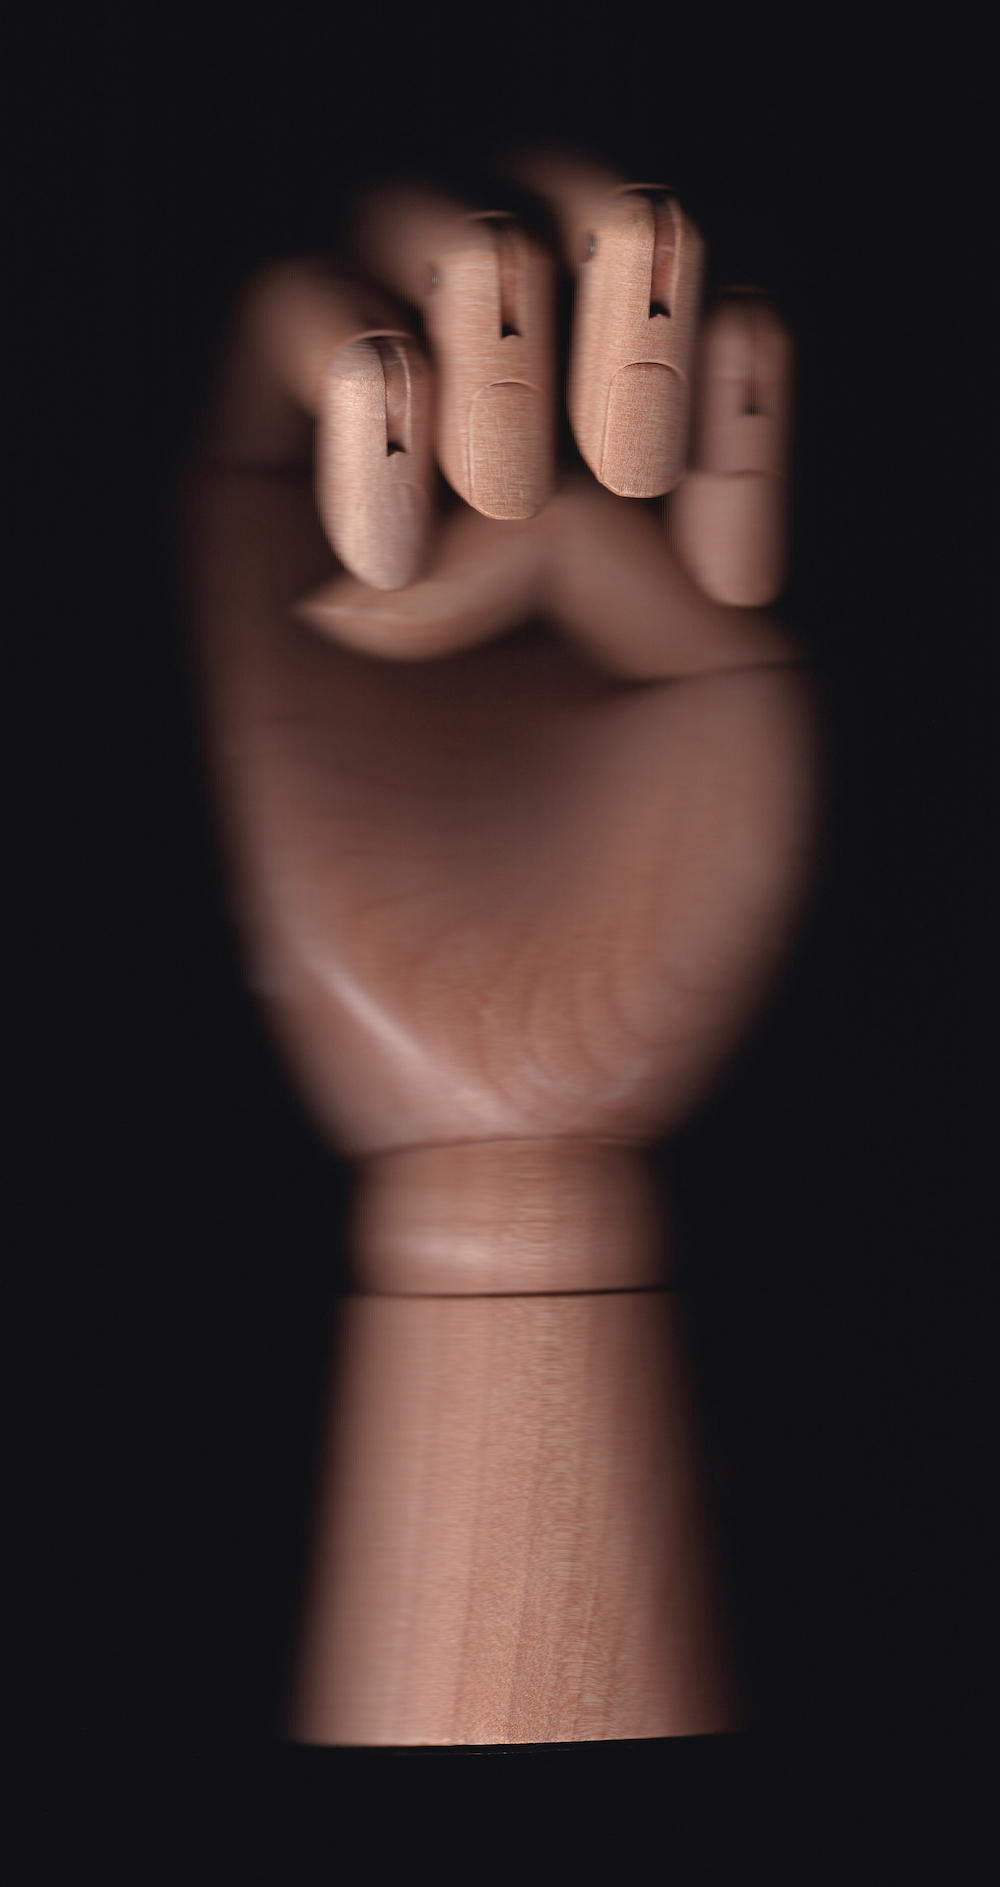 Scan of manequin hand